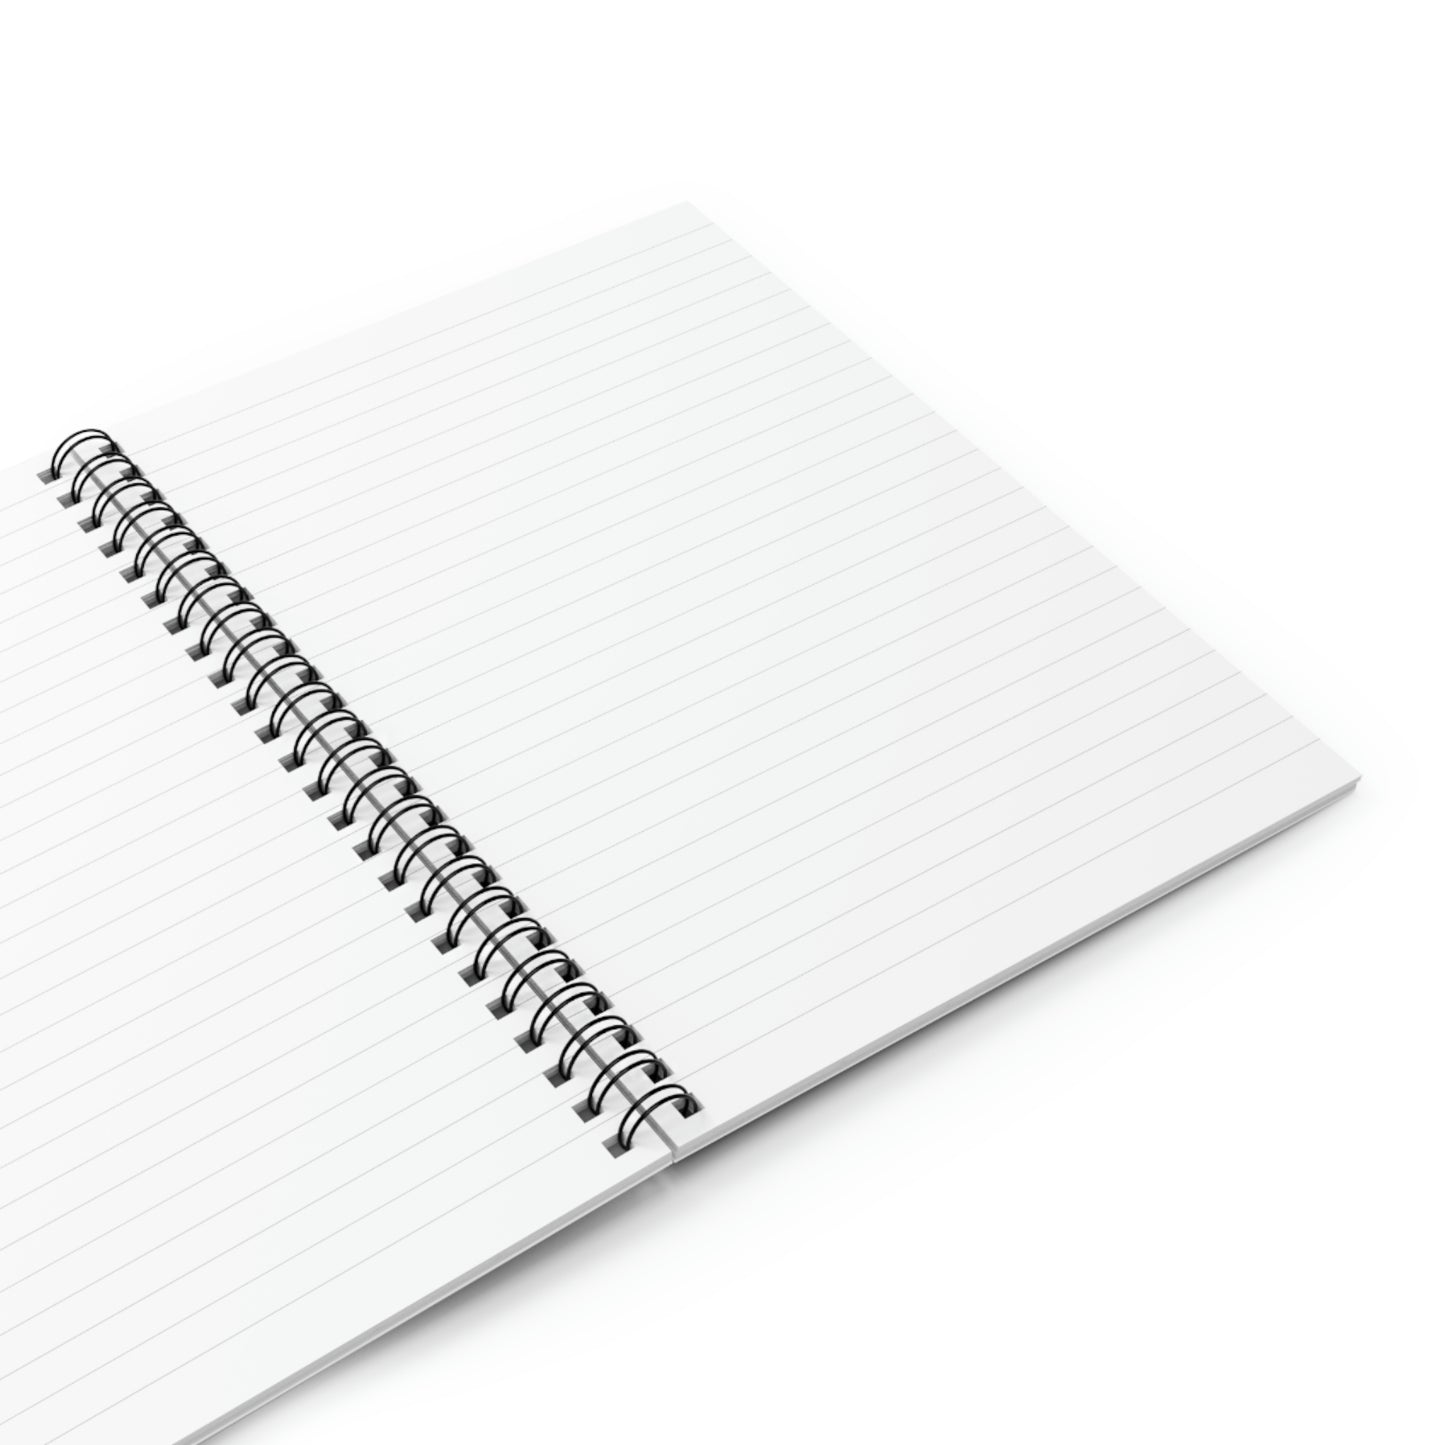 Spiral Notebook (ruled line) - Nissan Quakertown